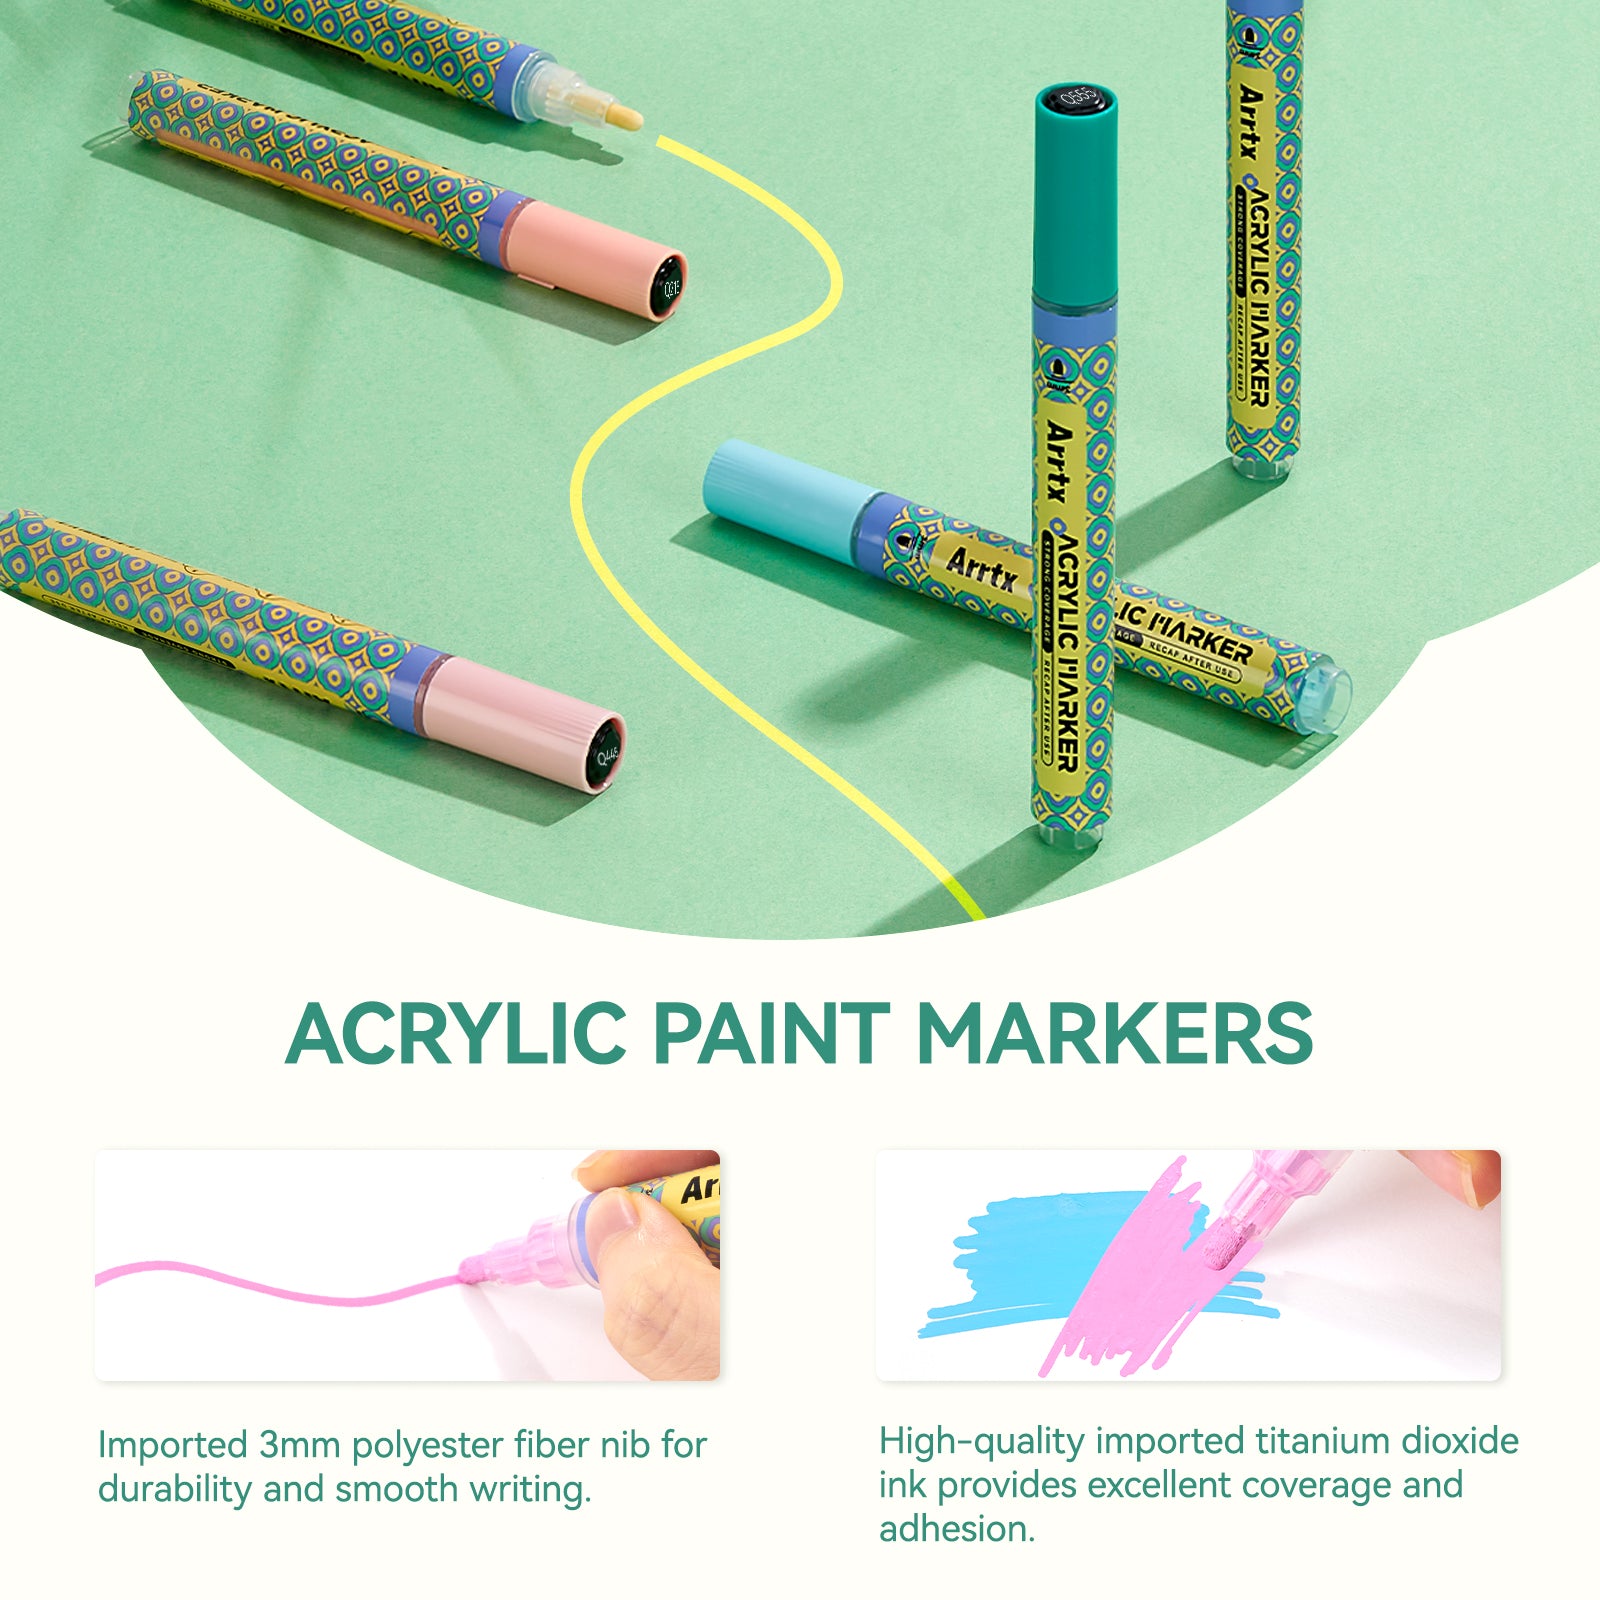 [Coming Soon] Arrtx 36 Colors Acrylic Paint Markers 3mm Medium Tip Valve Design